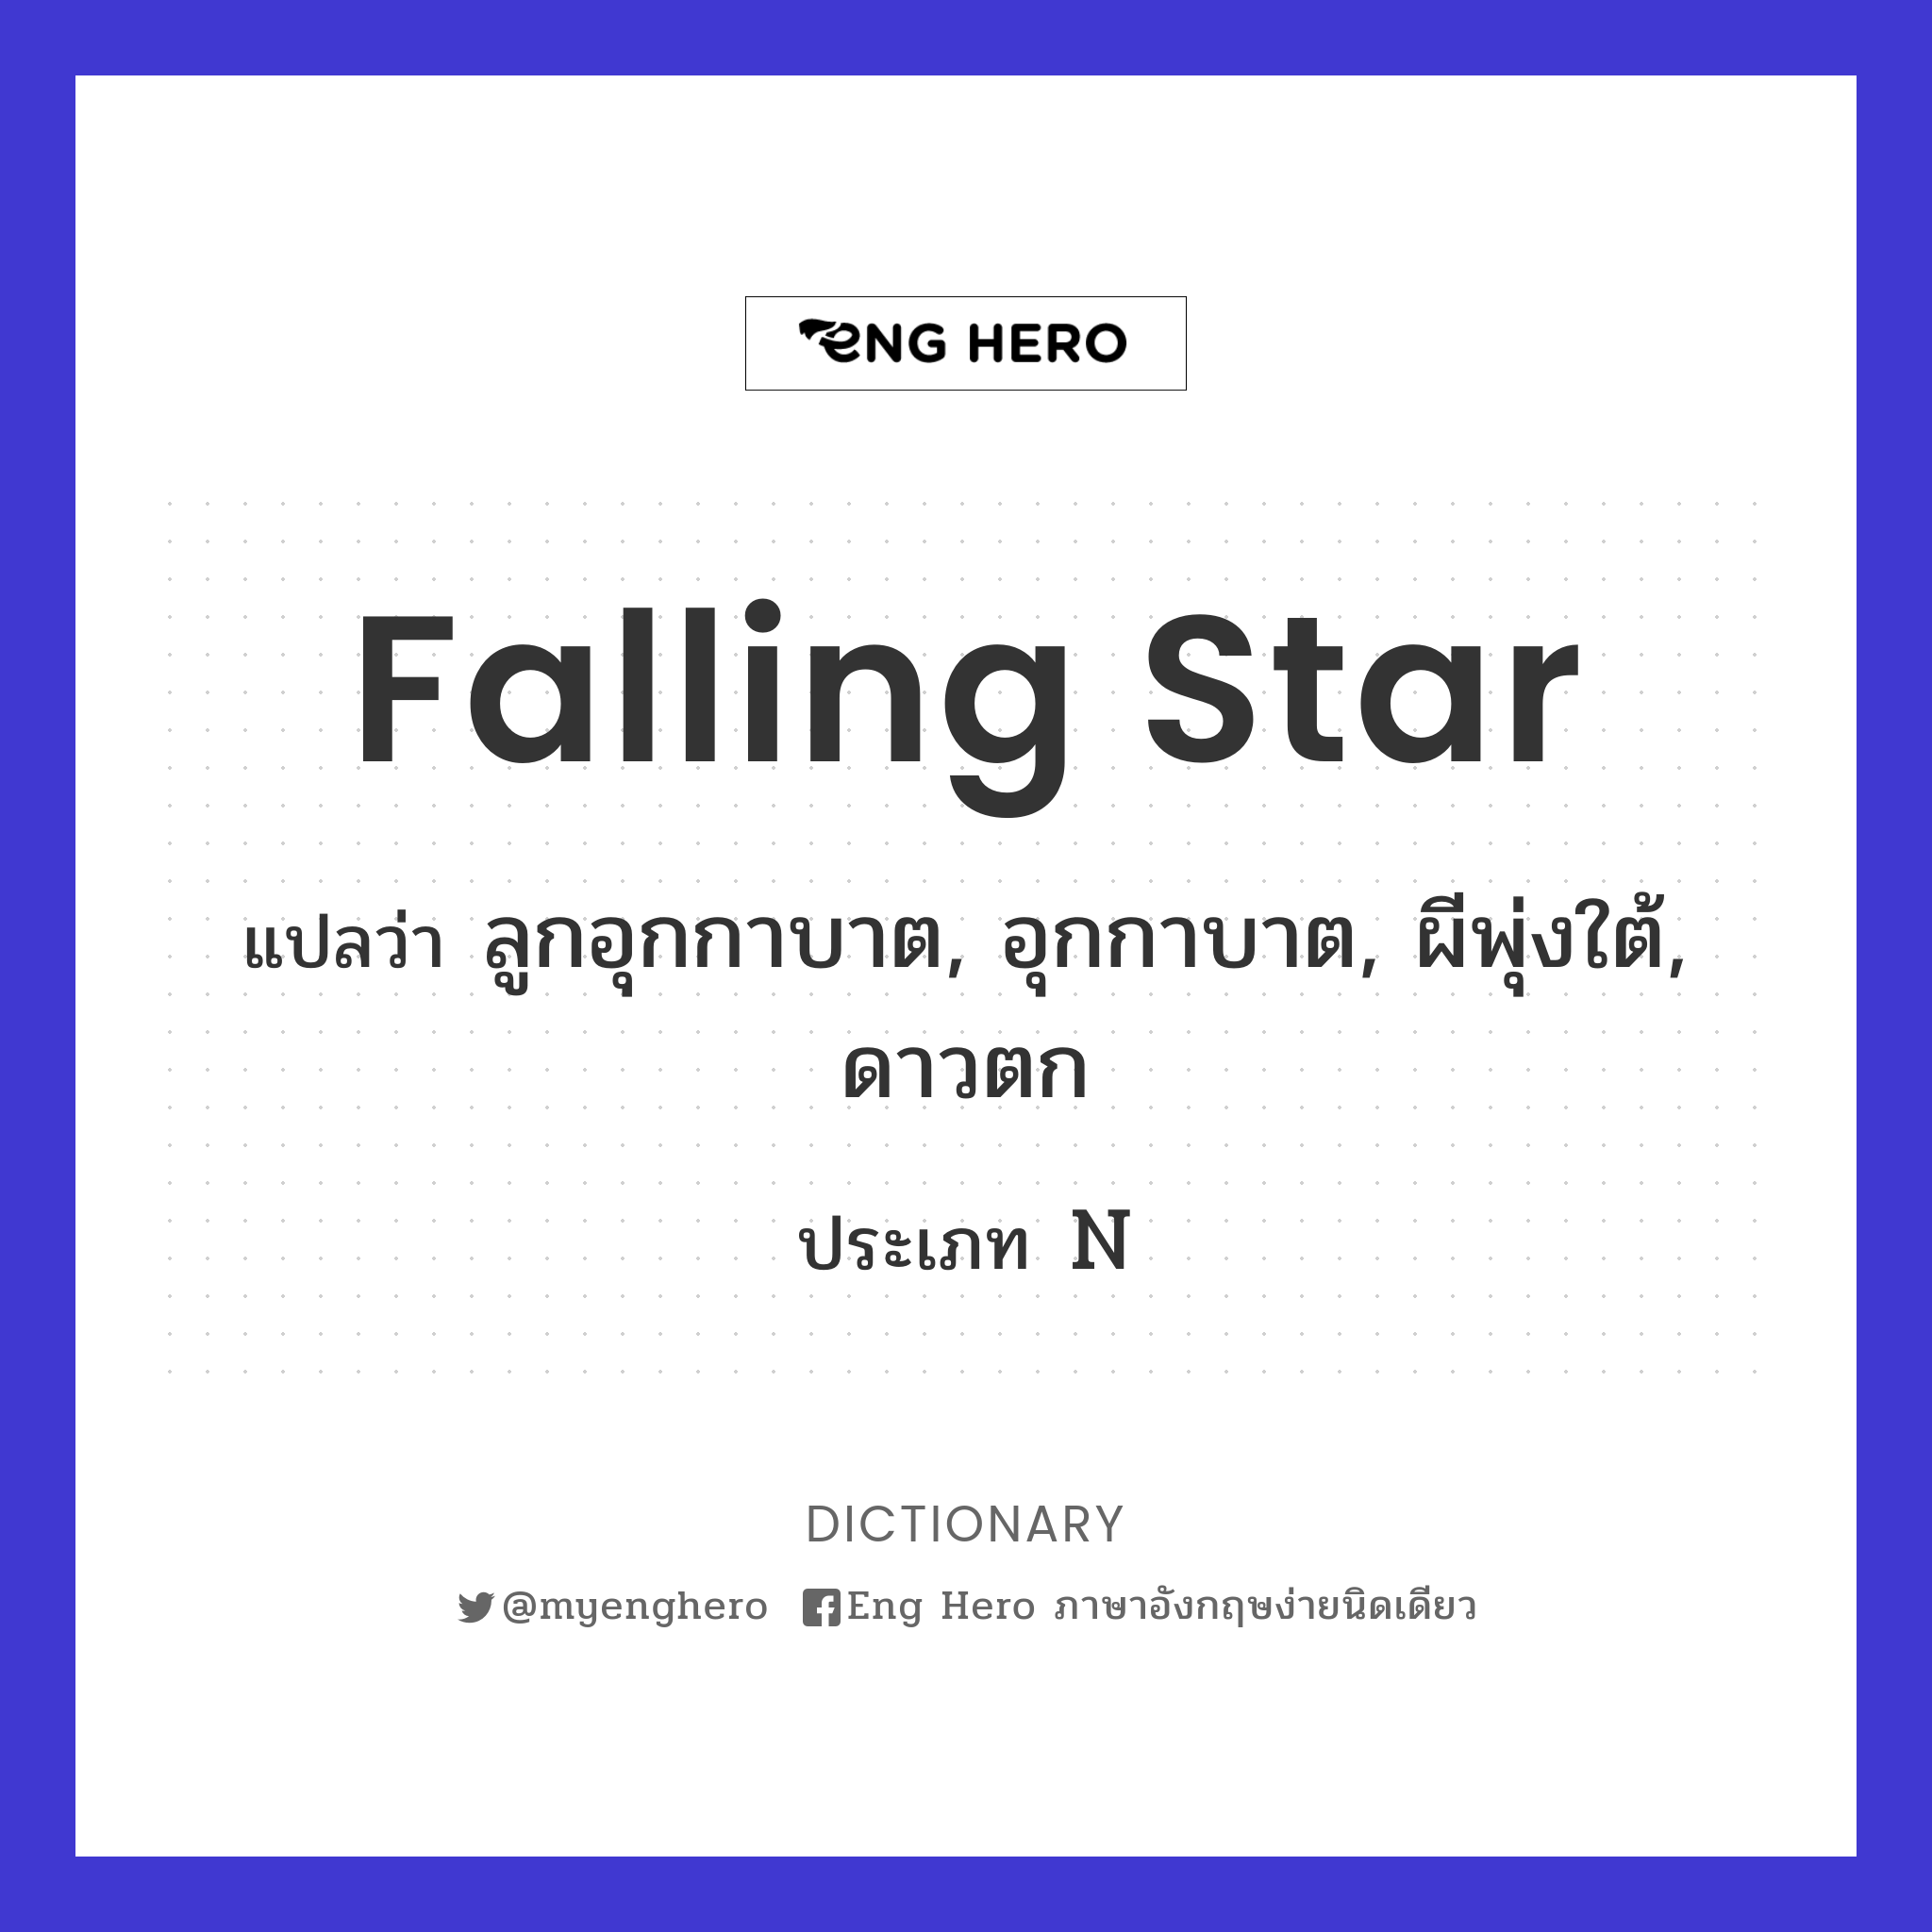 falling star